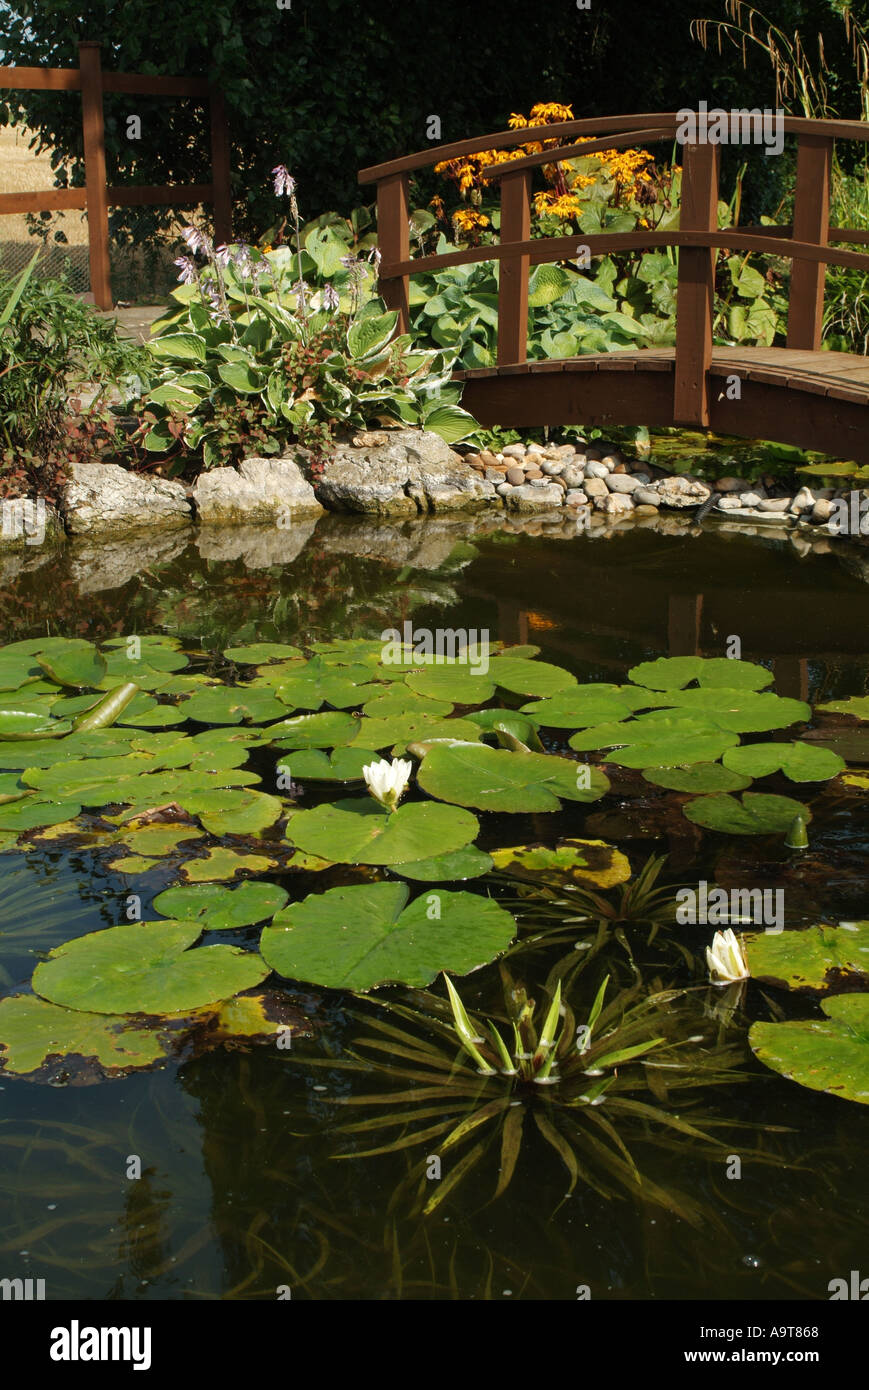 Informal garden pond in summer with a Monet-style wooden bridge, England, UK. Stock Photo